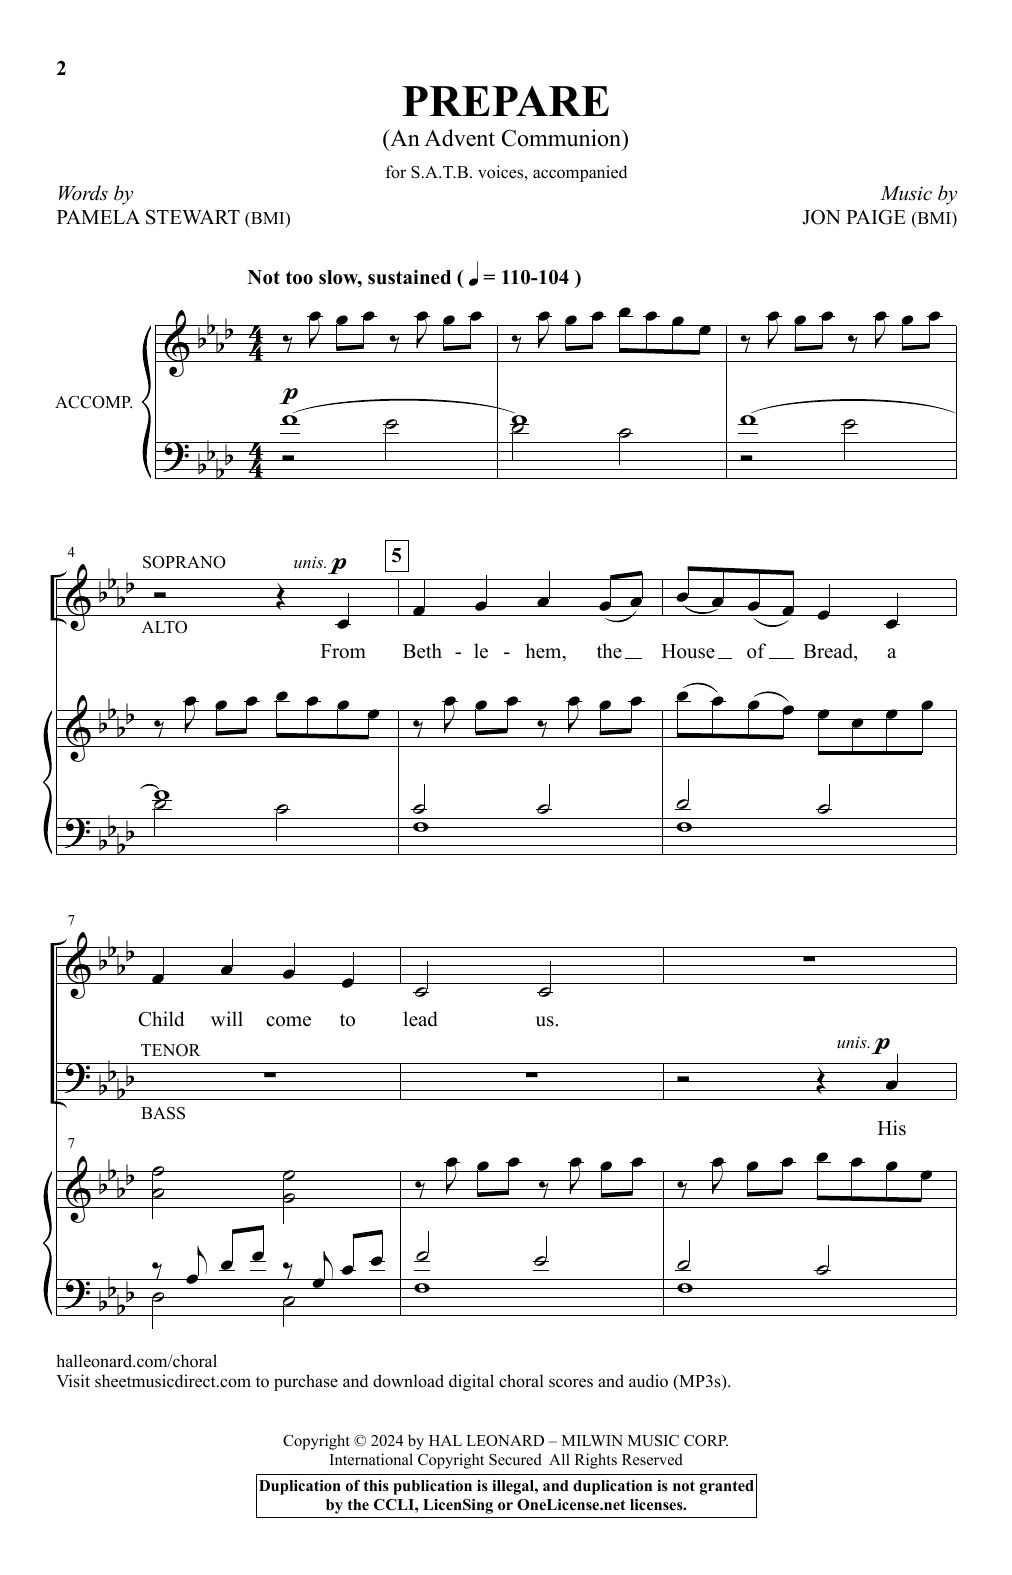 Jon Paige Prepare (An Advent Communion) Sheet Music Notes & Chords for SATB Choir - Download or Print PDF